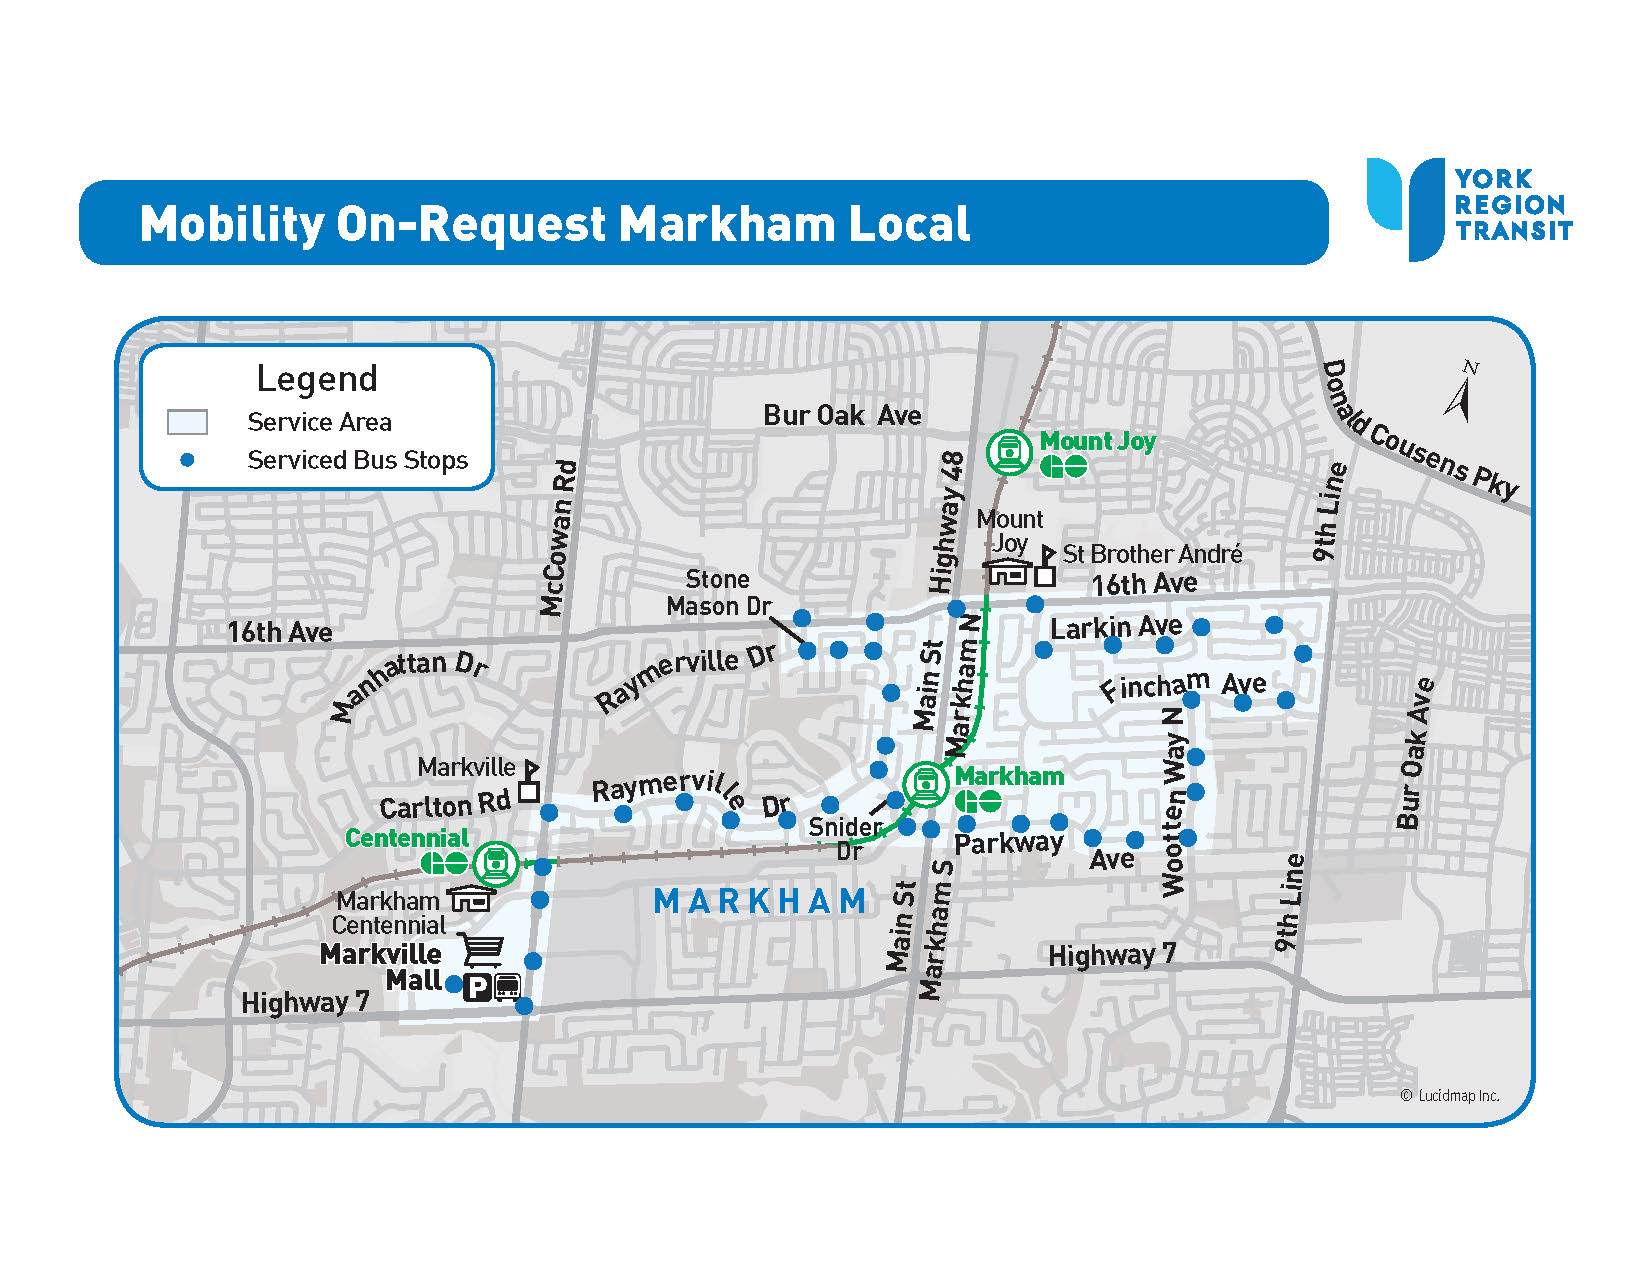 MOR Markham Local service area map